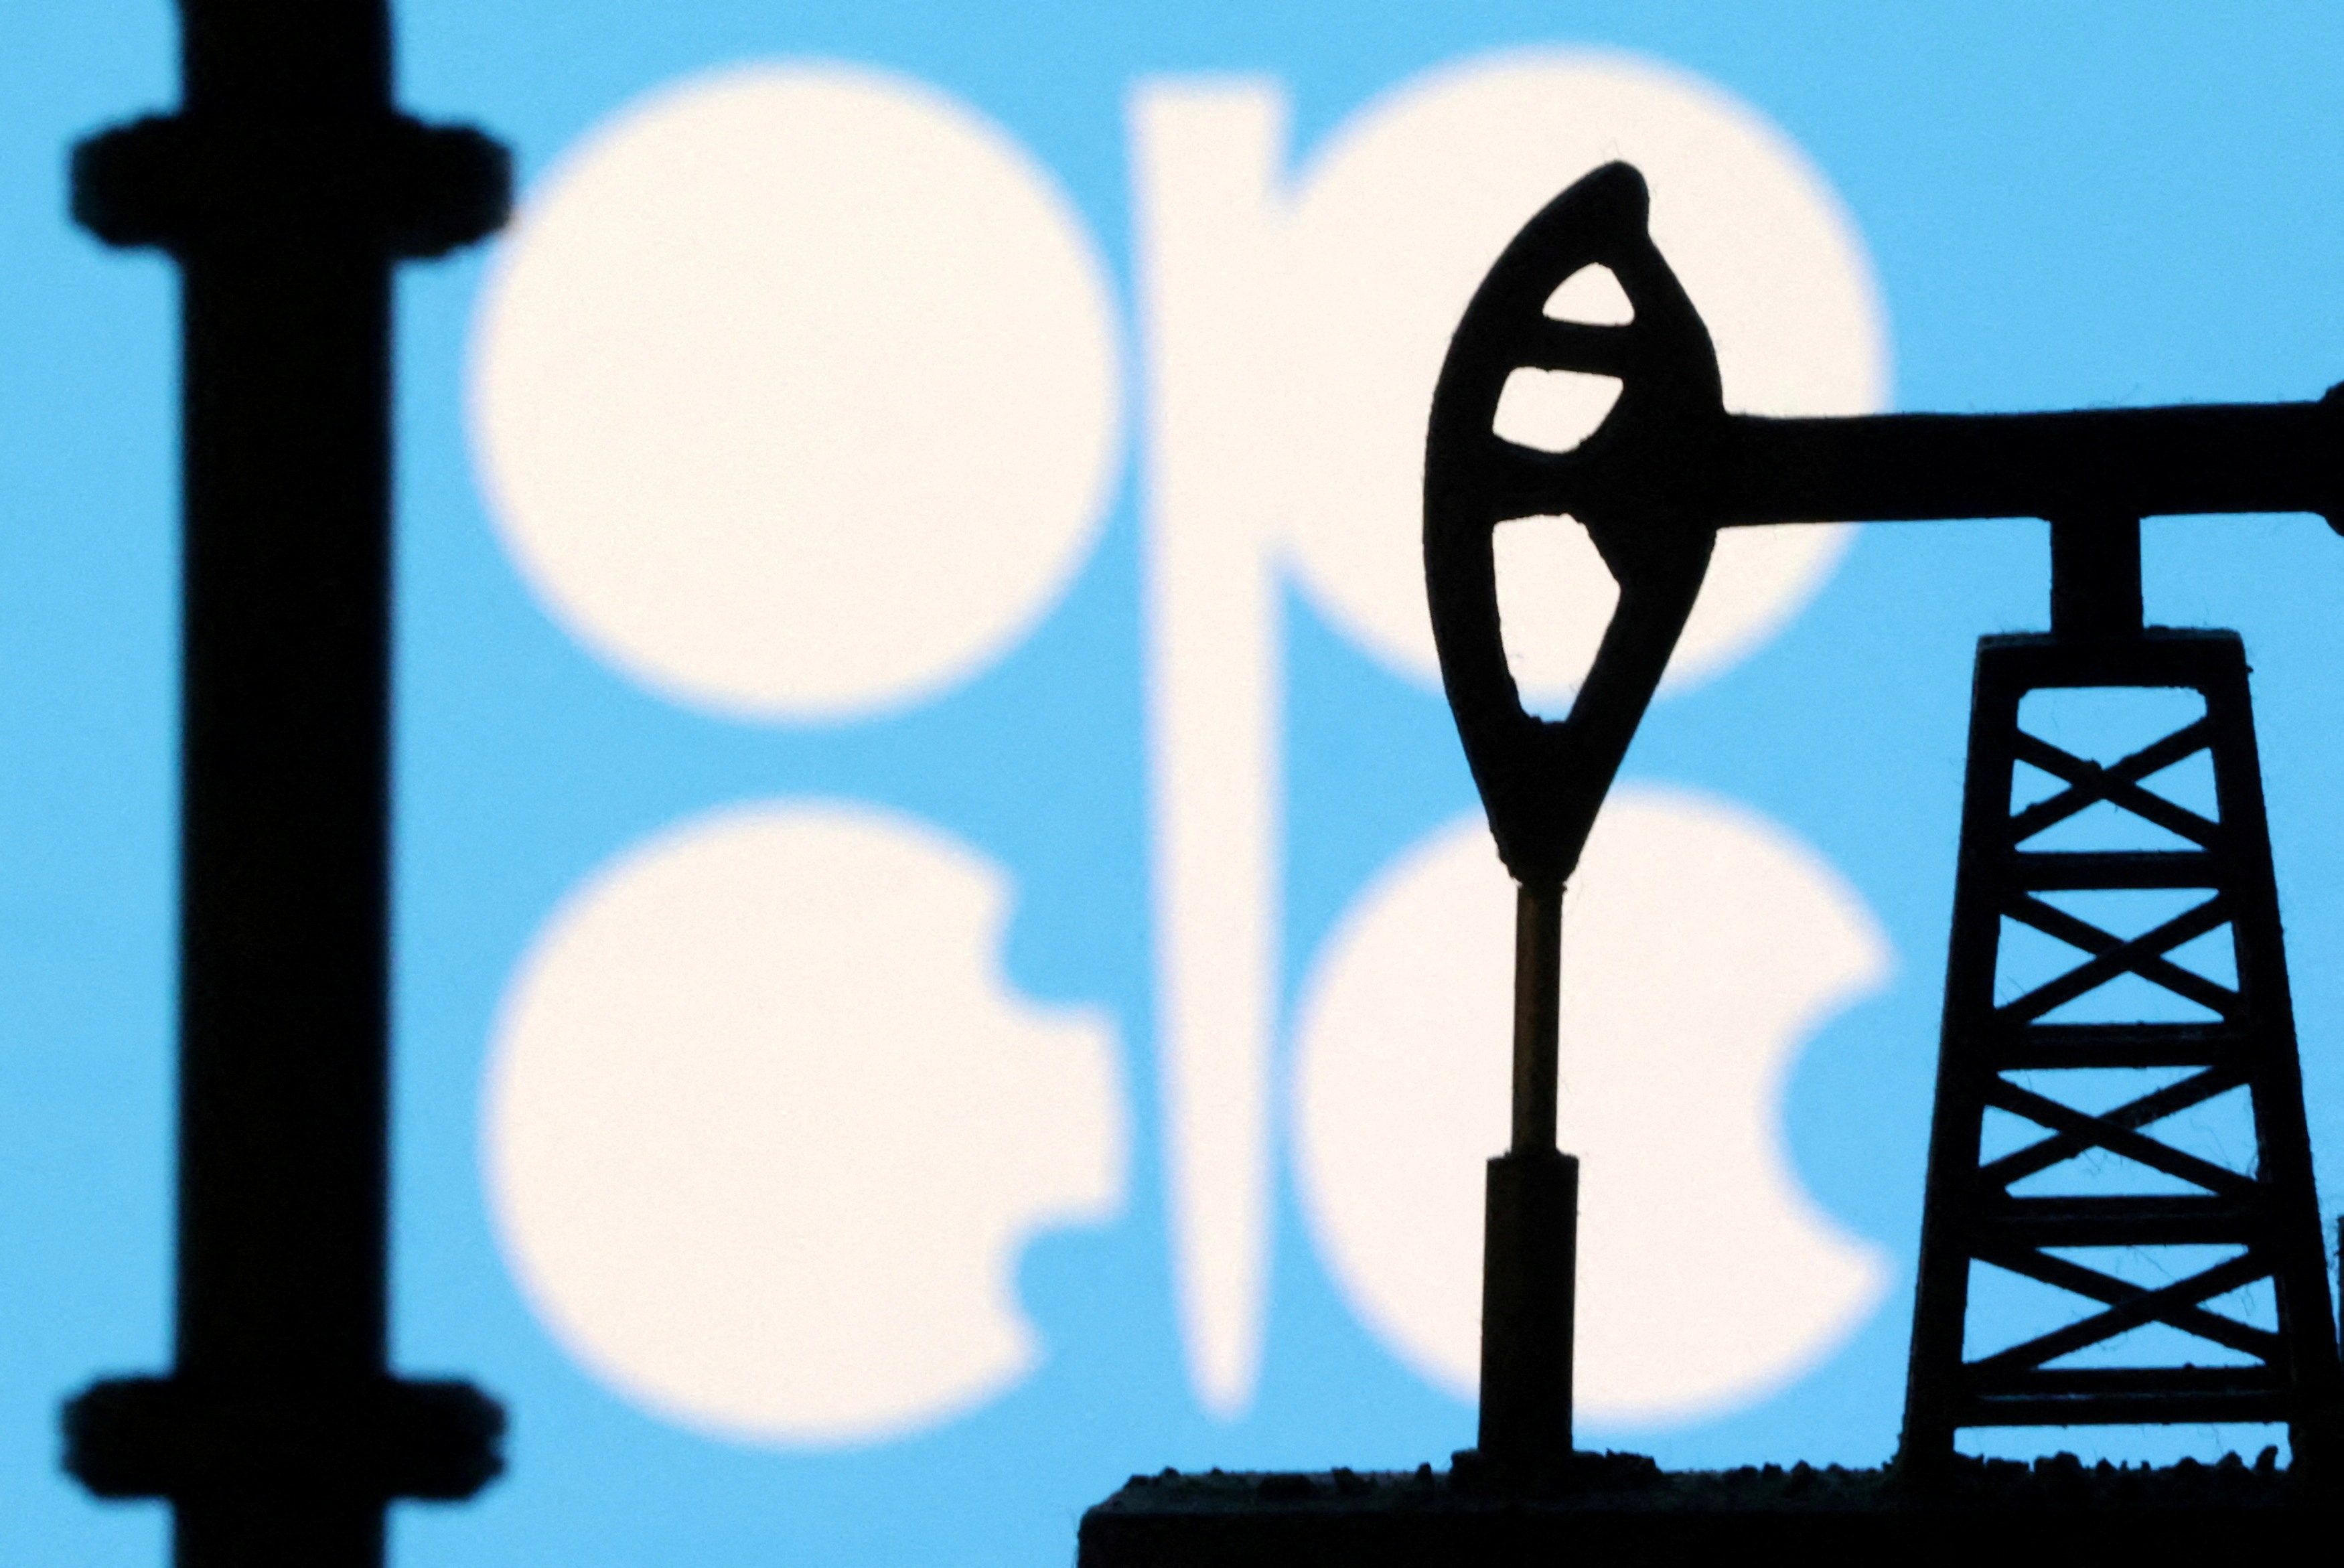 Illustration shows OPEC logo